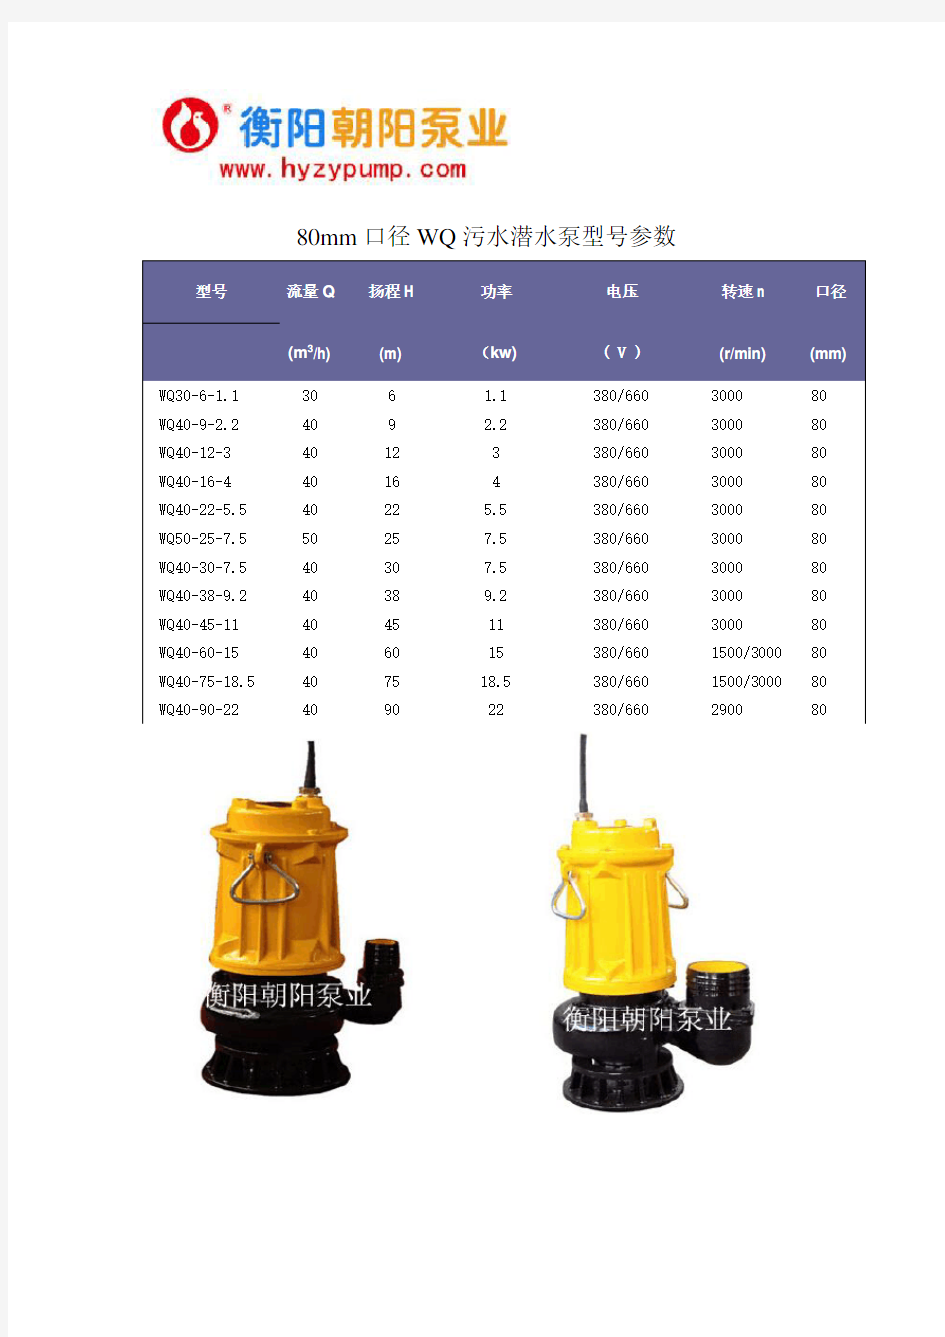 80mm口径WQ污水潜水泵型号参数(衡阳朝阳泵业)